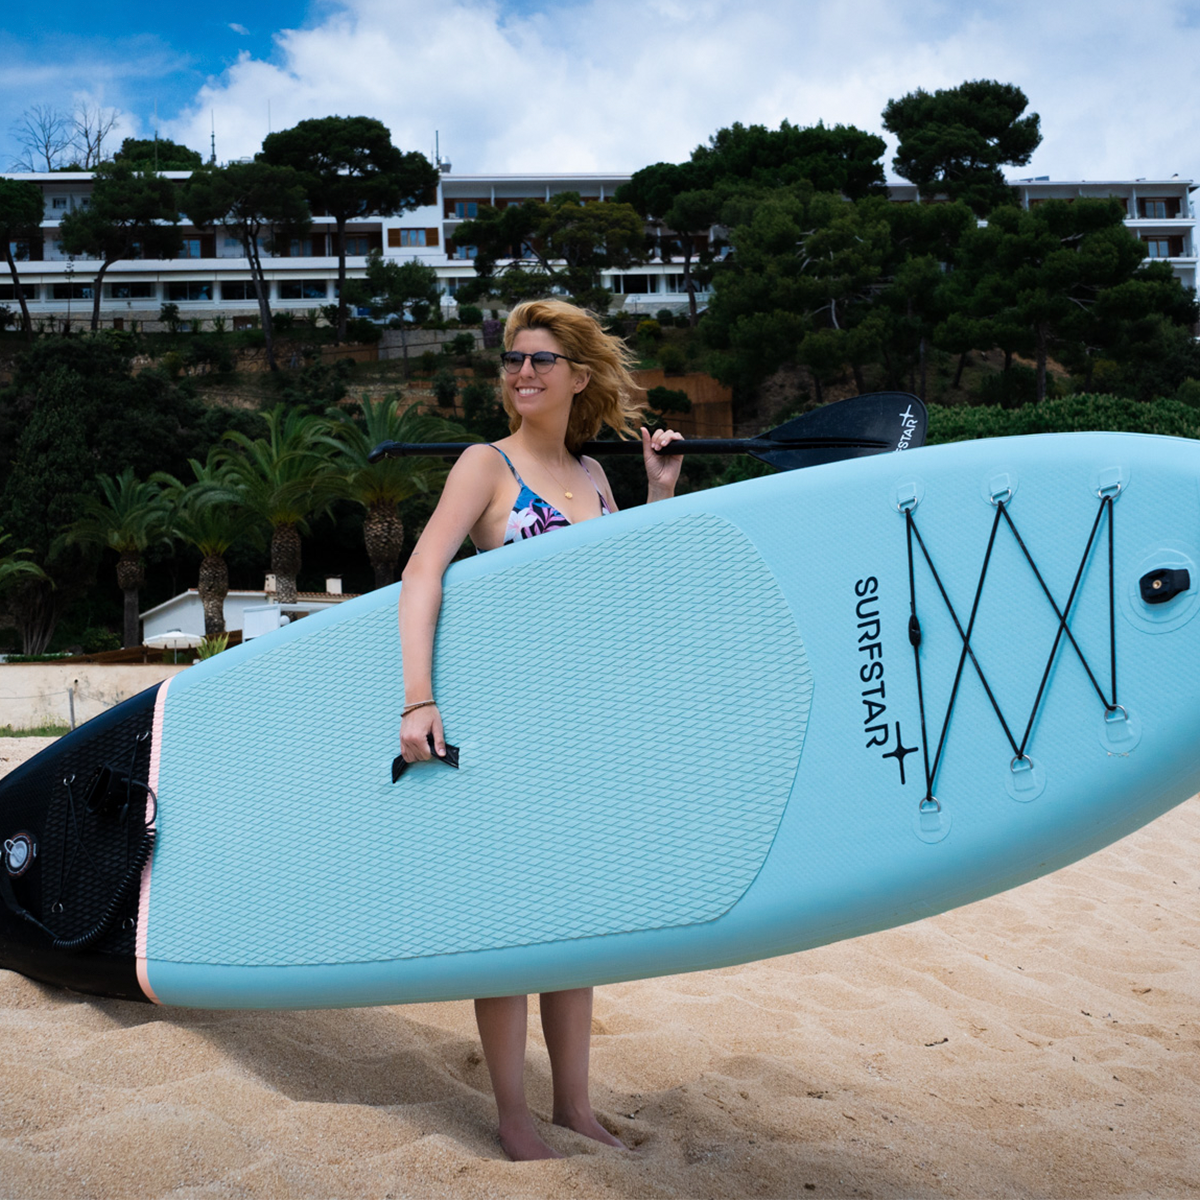 SurfStar SUP Board